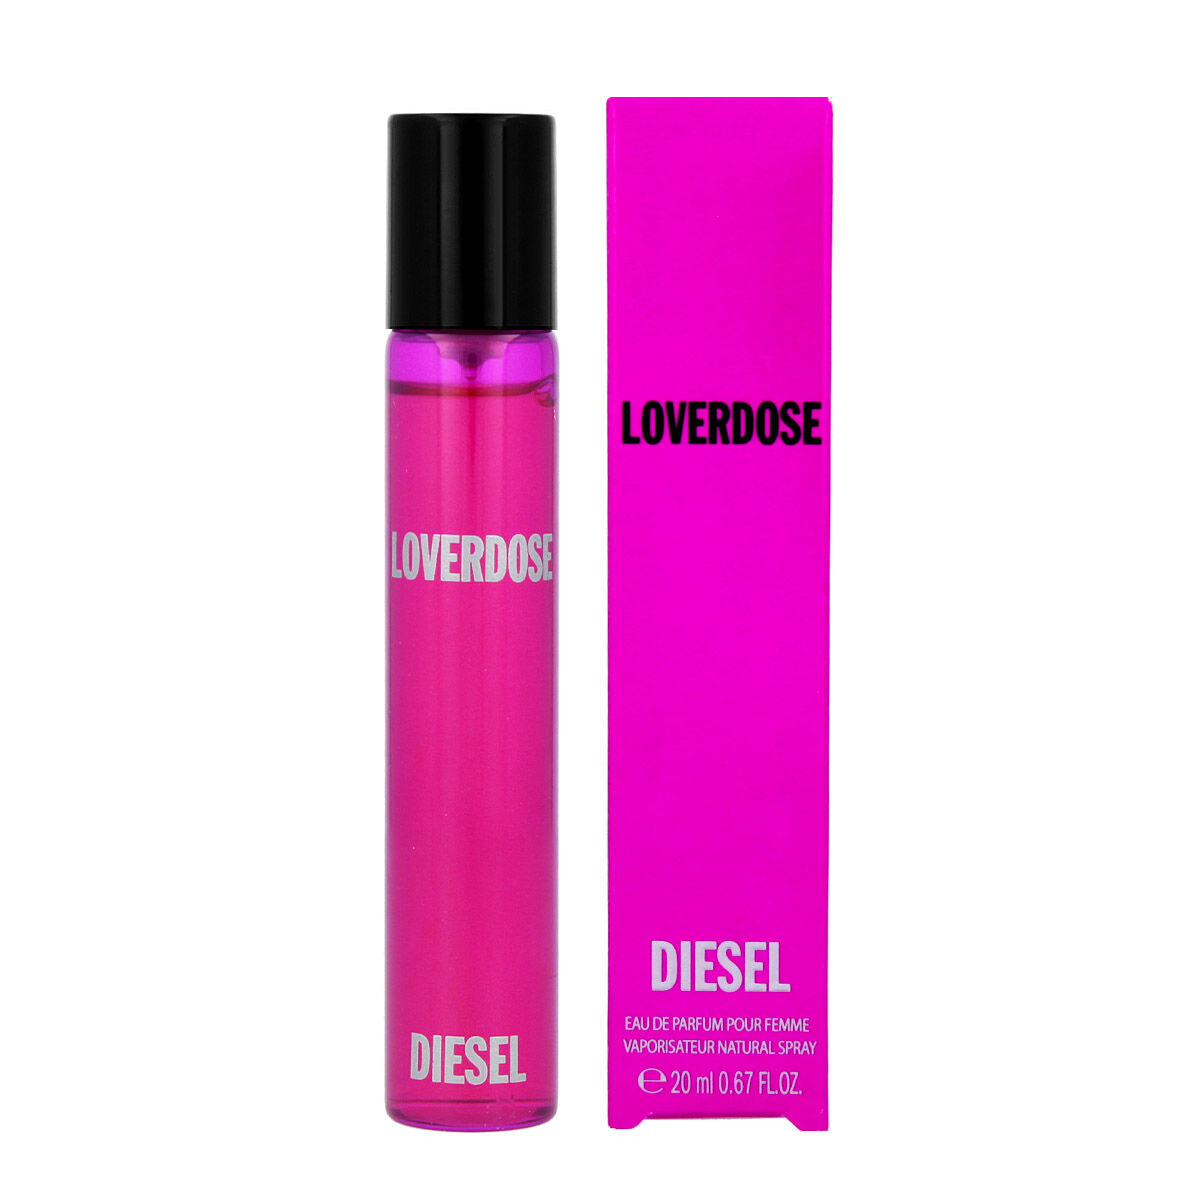 Parfum Femme Diesel   EDP Loverdose (20 ml)